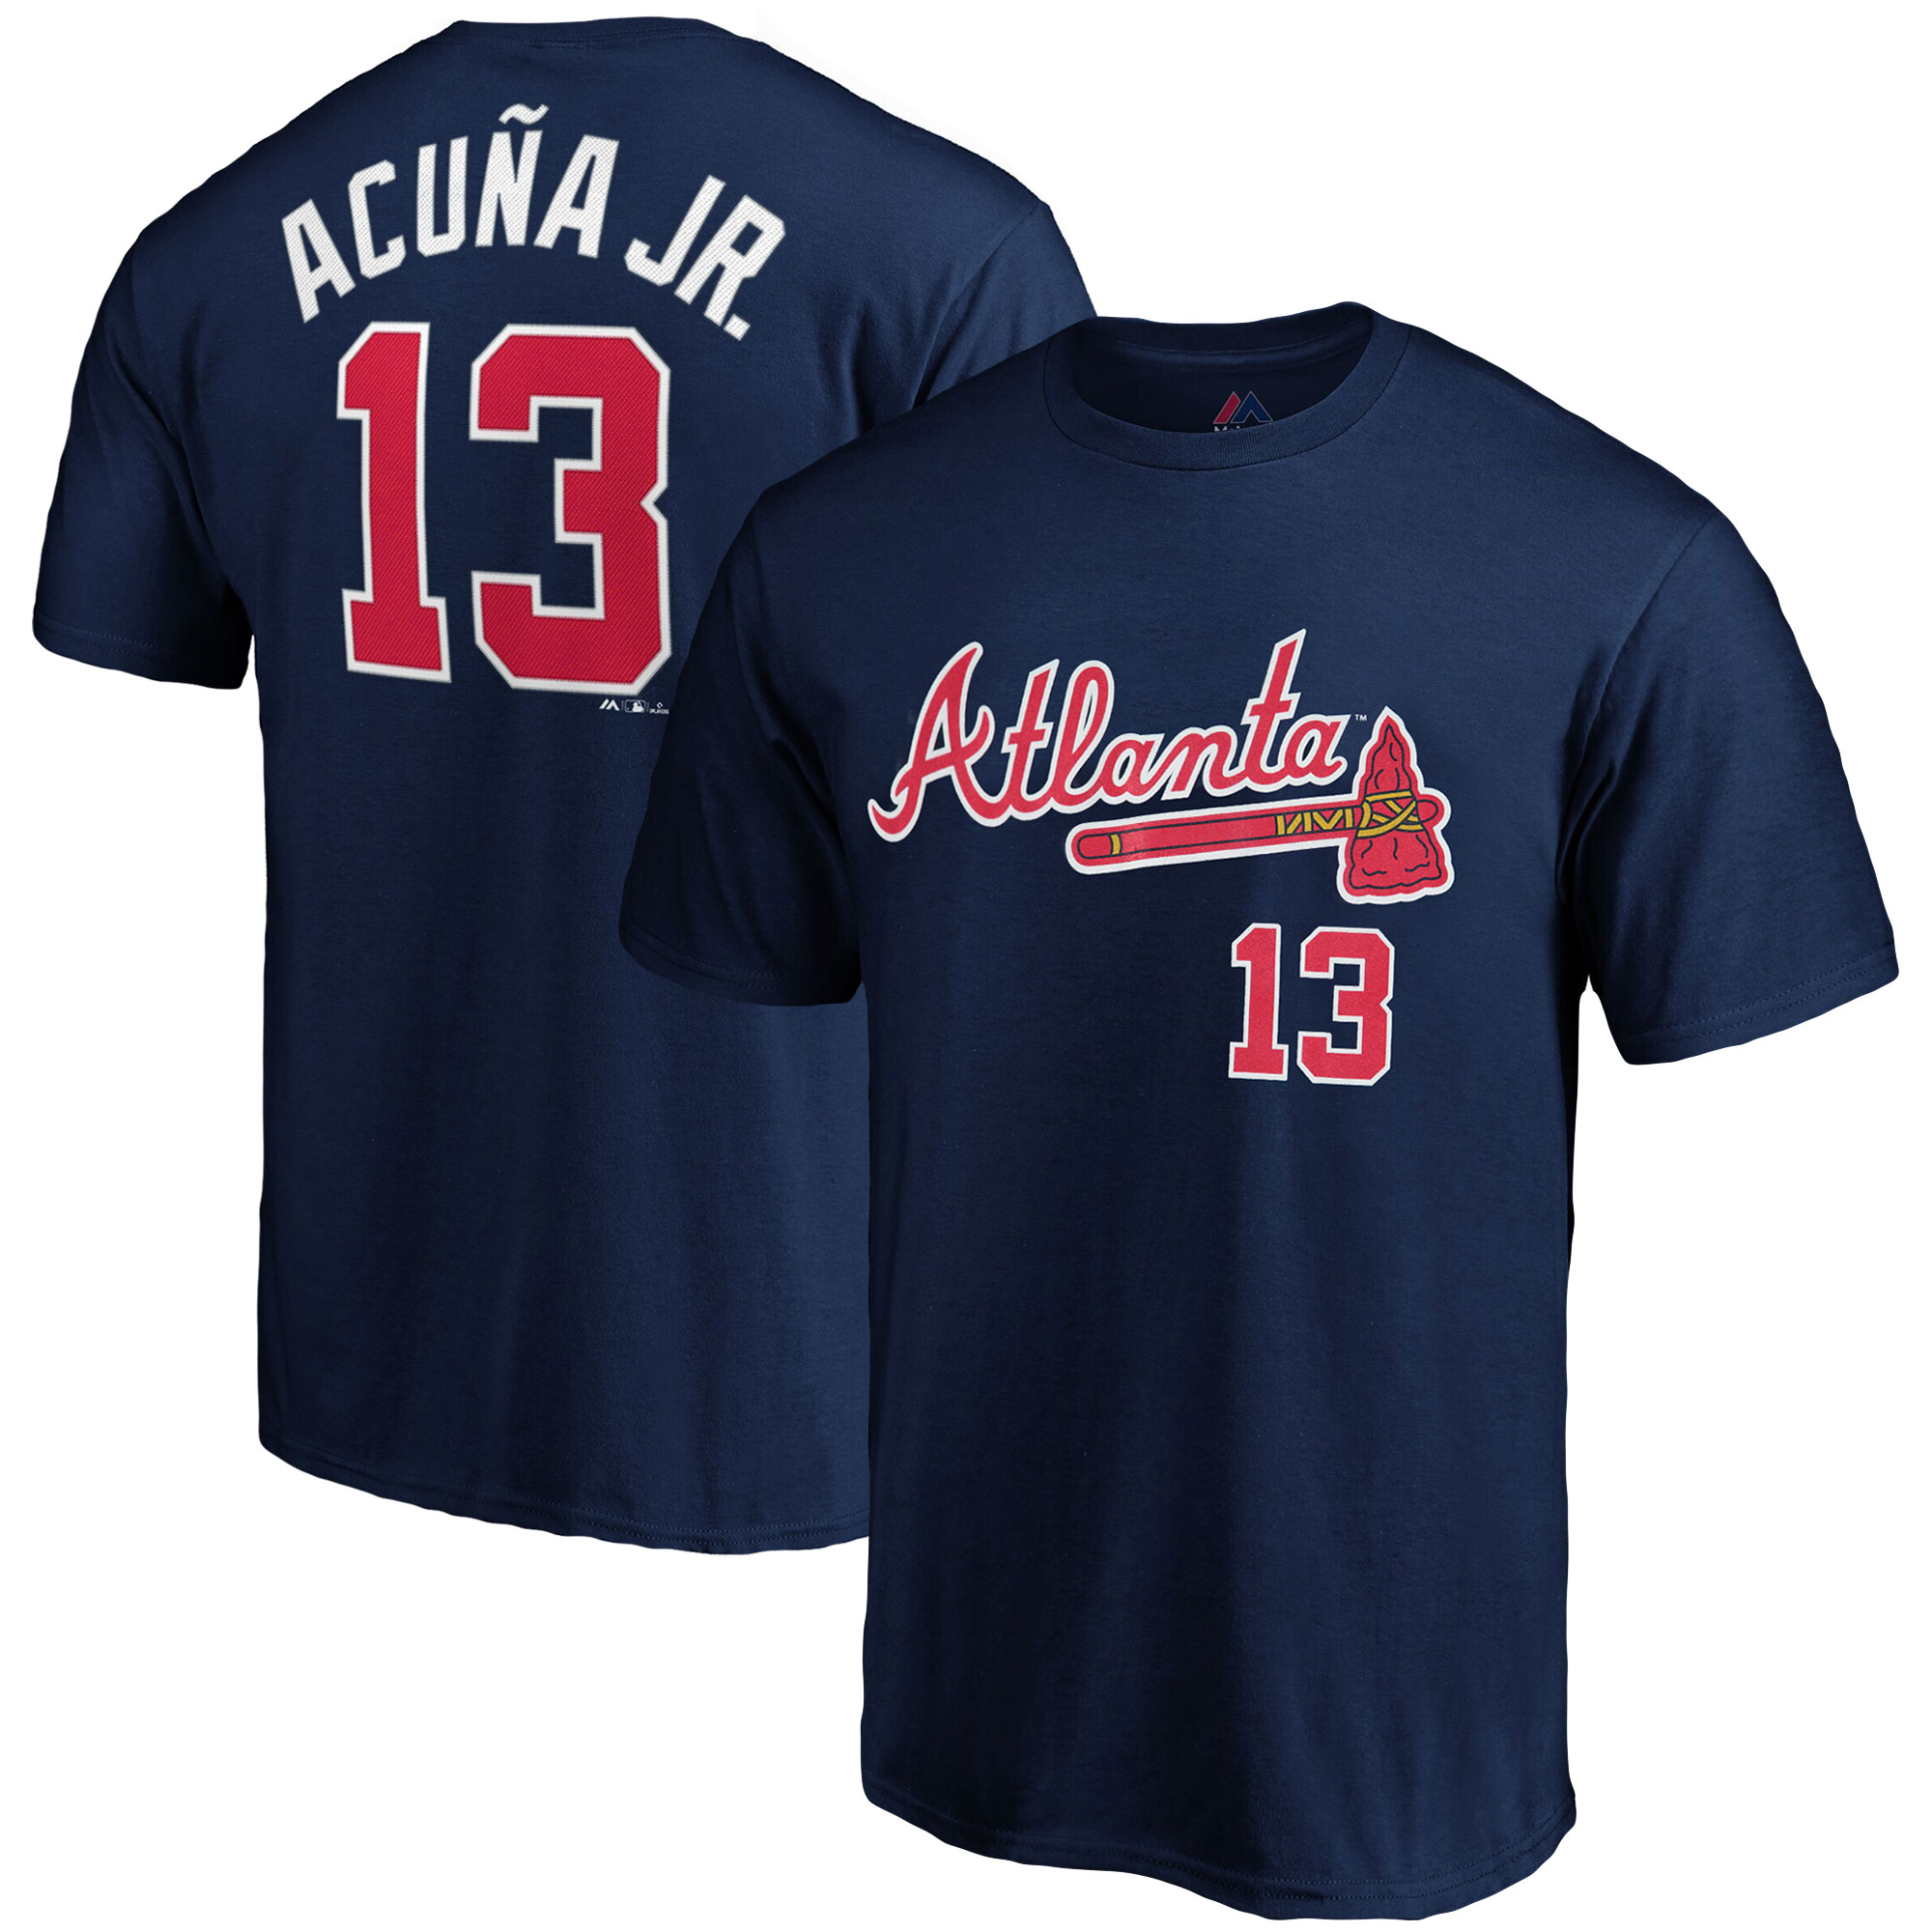 Atlanta Braves R Acuna Jr - MLB Player Men's Short Sleeve Crew Neck T-Shirt - image 1 of 3